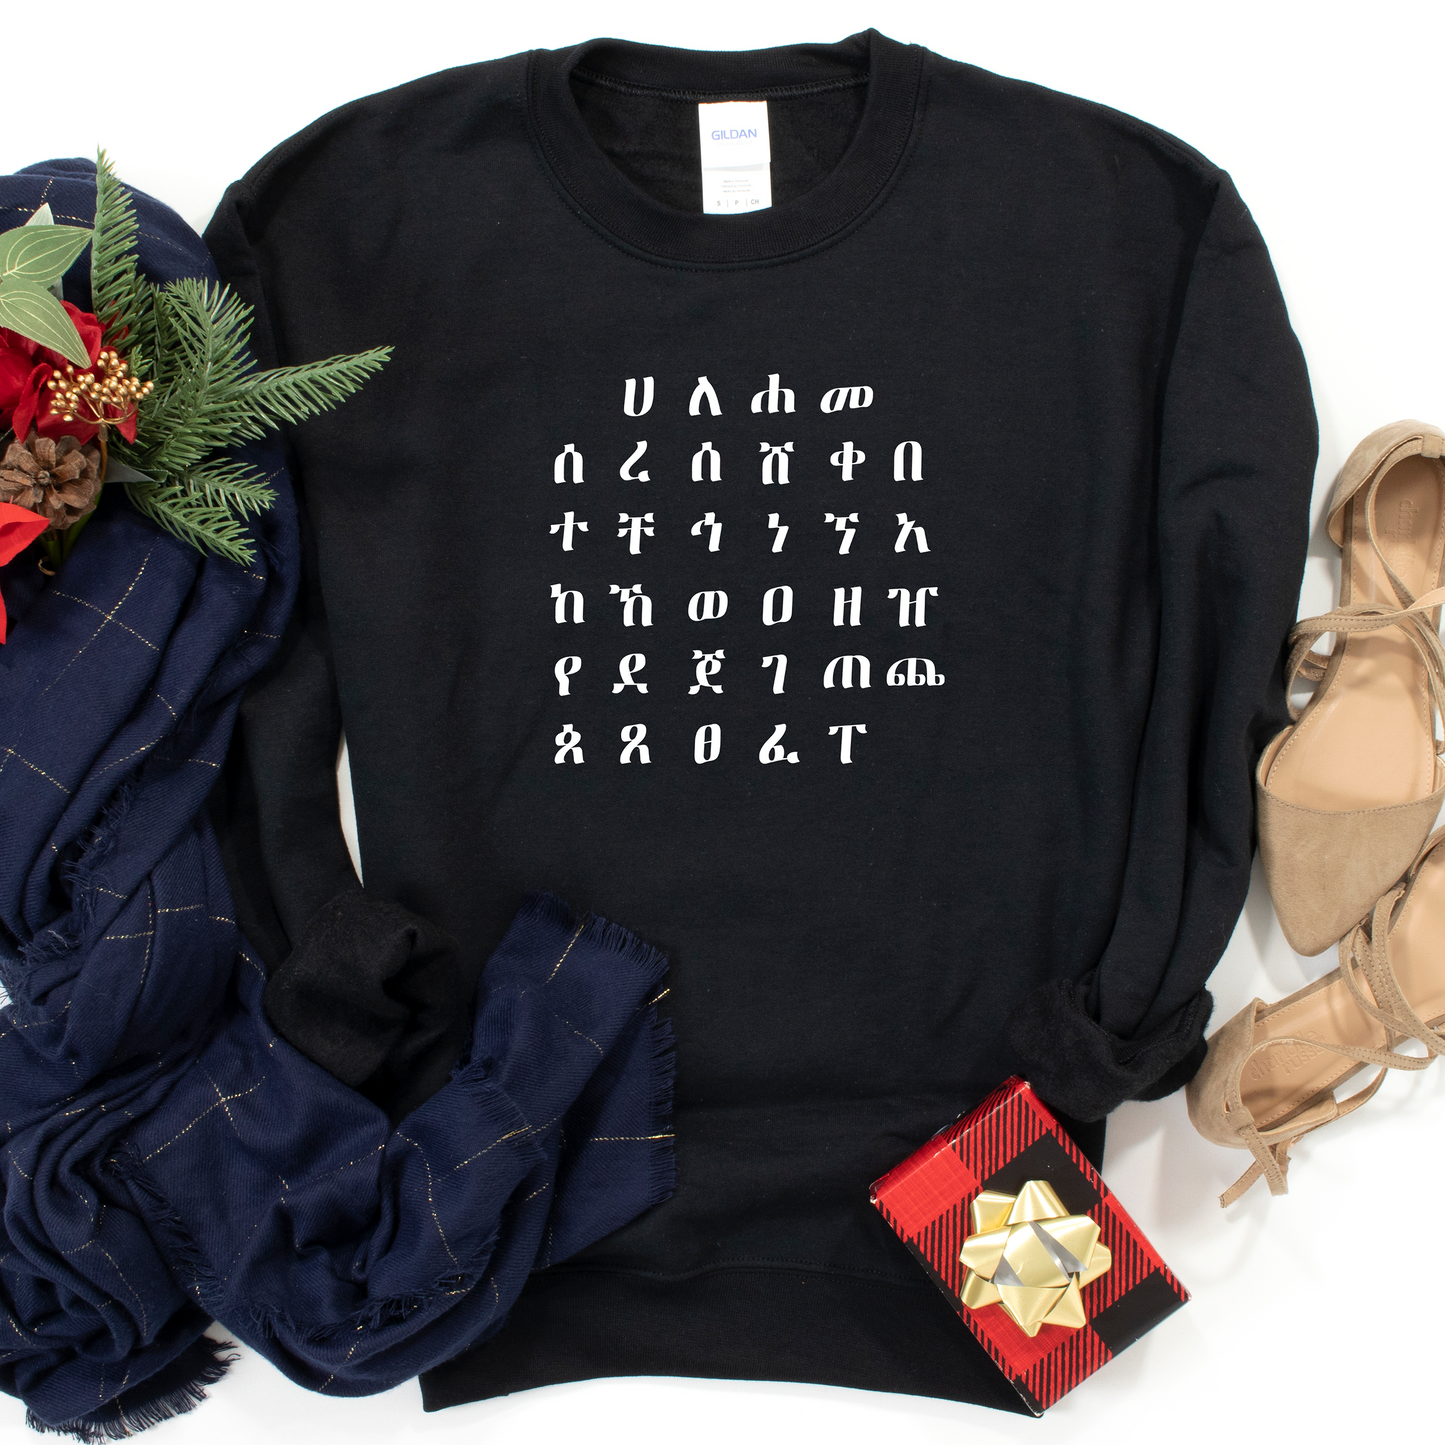 Ethiopian alphabet Sweatshirt